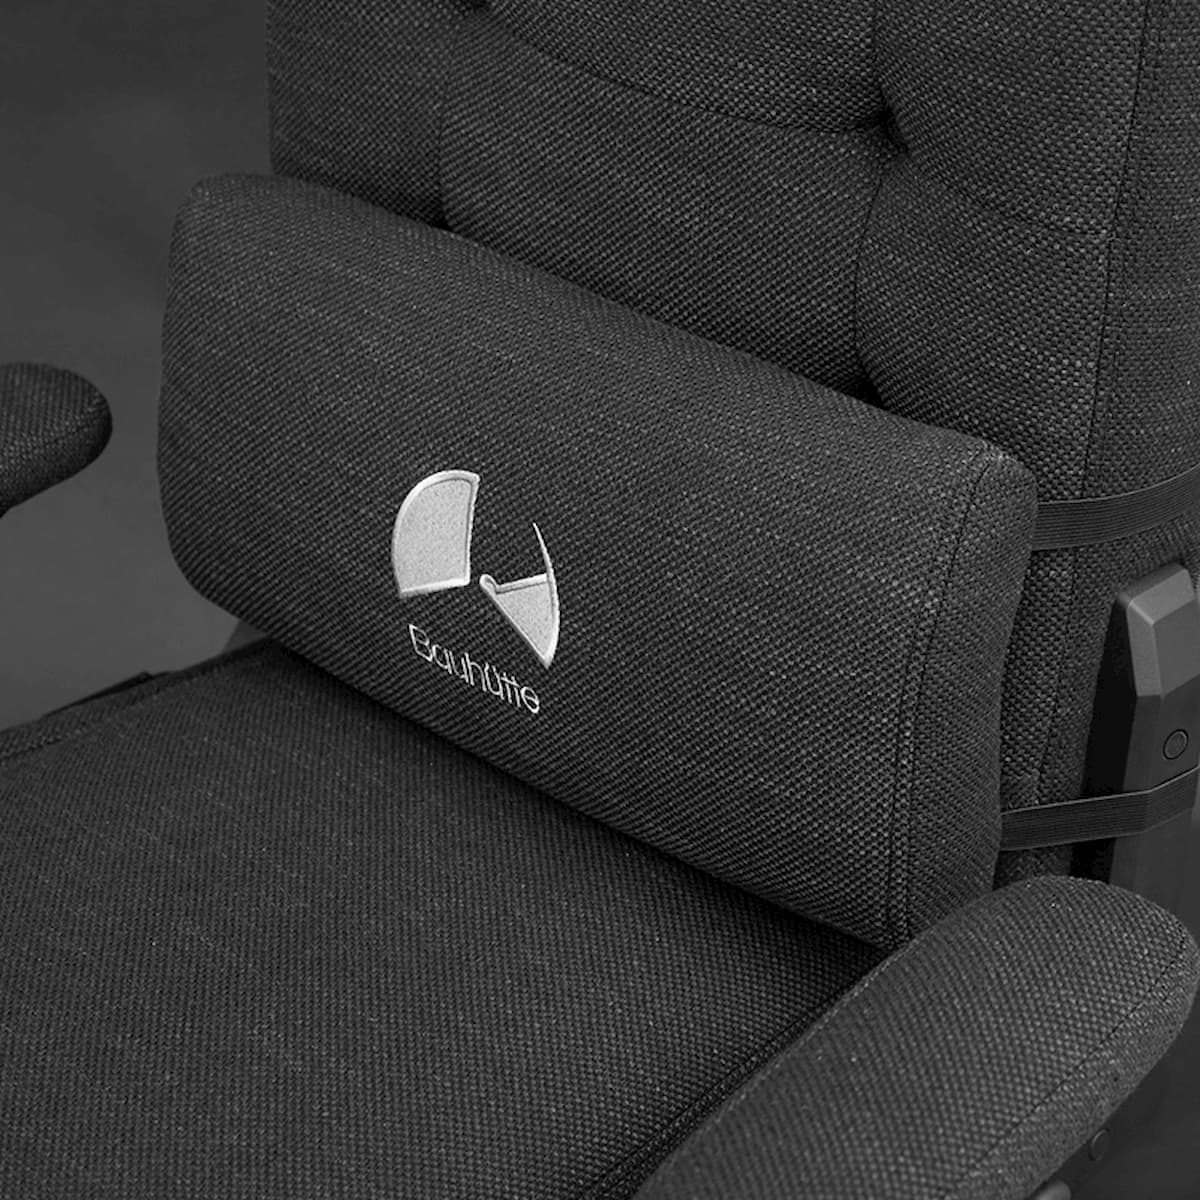 Bauhutte Gaming Floor Sofa Chair GX-350